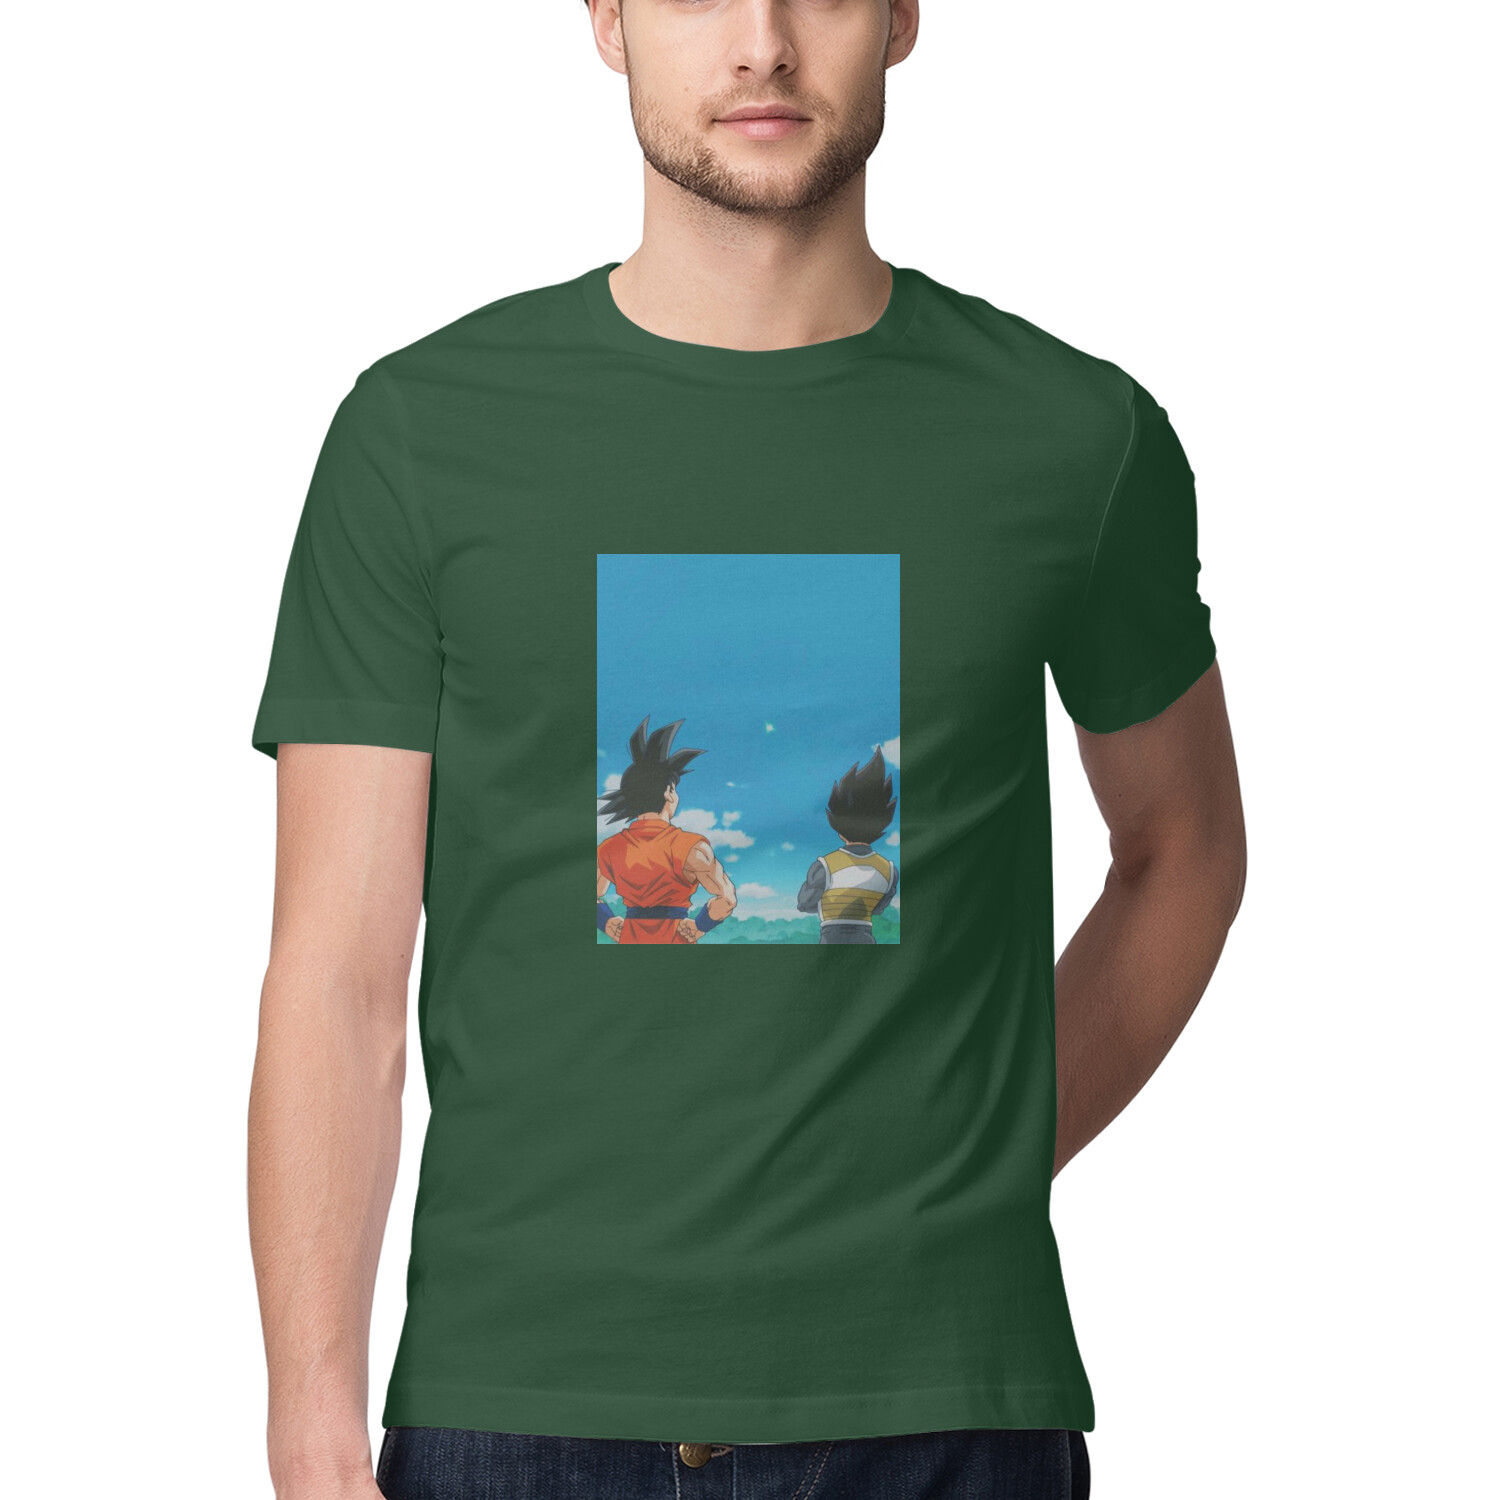 Goku-Vegeta men's t-shirt